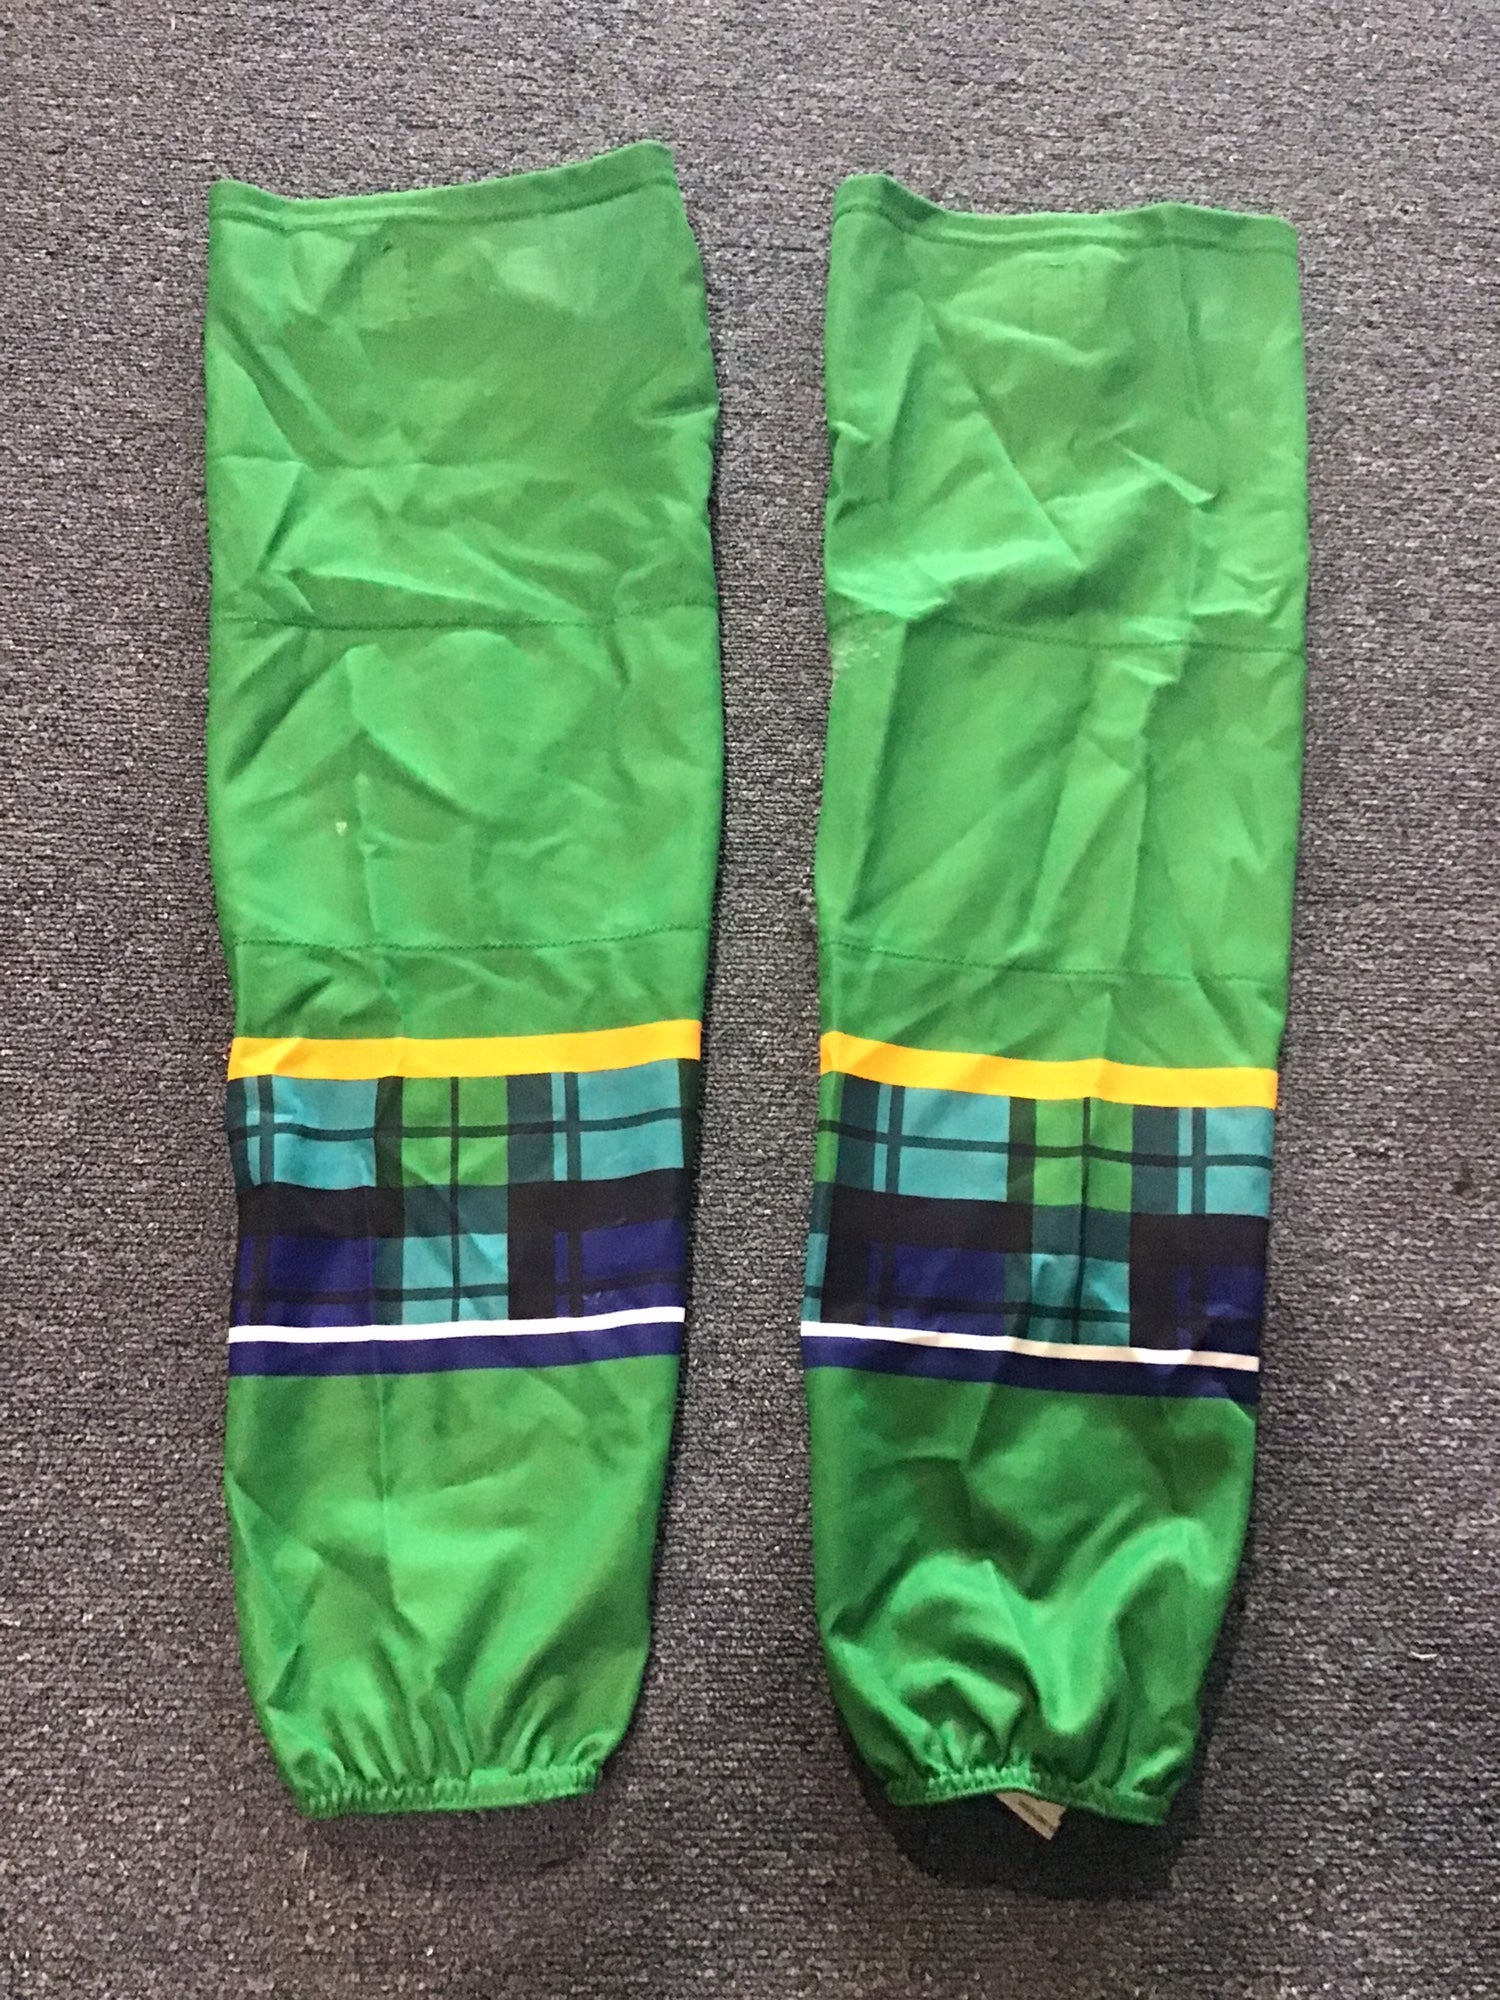 Colorado Avalanche  Socks for Sale by GarfieldKhan